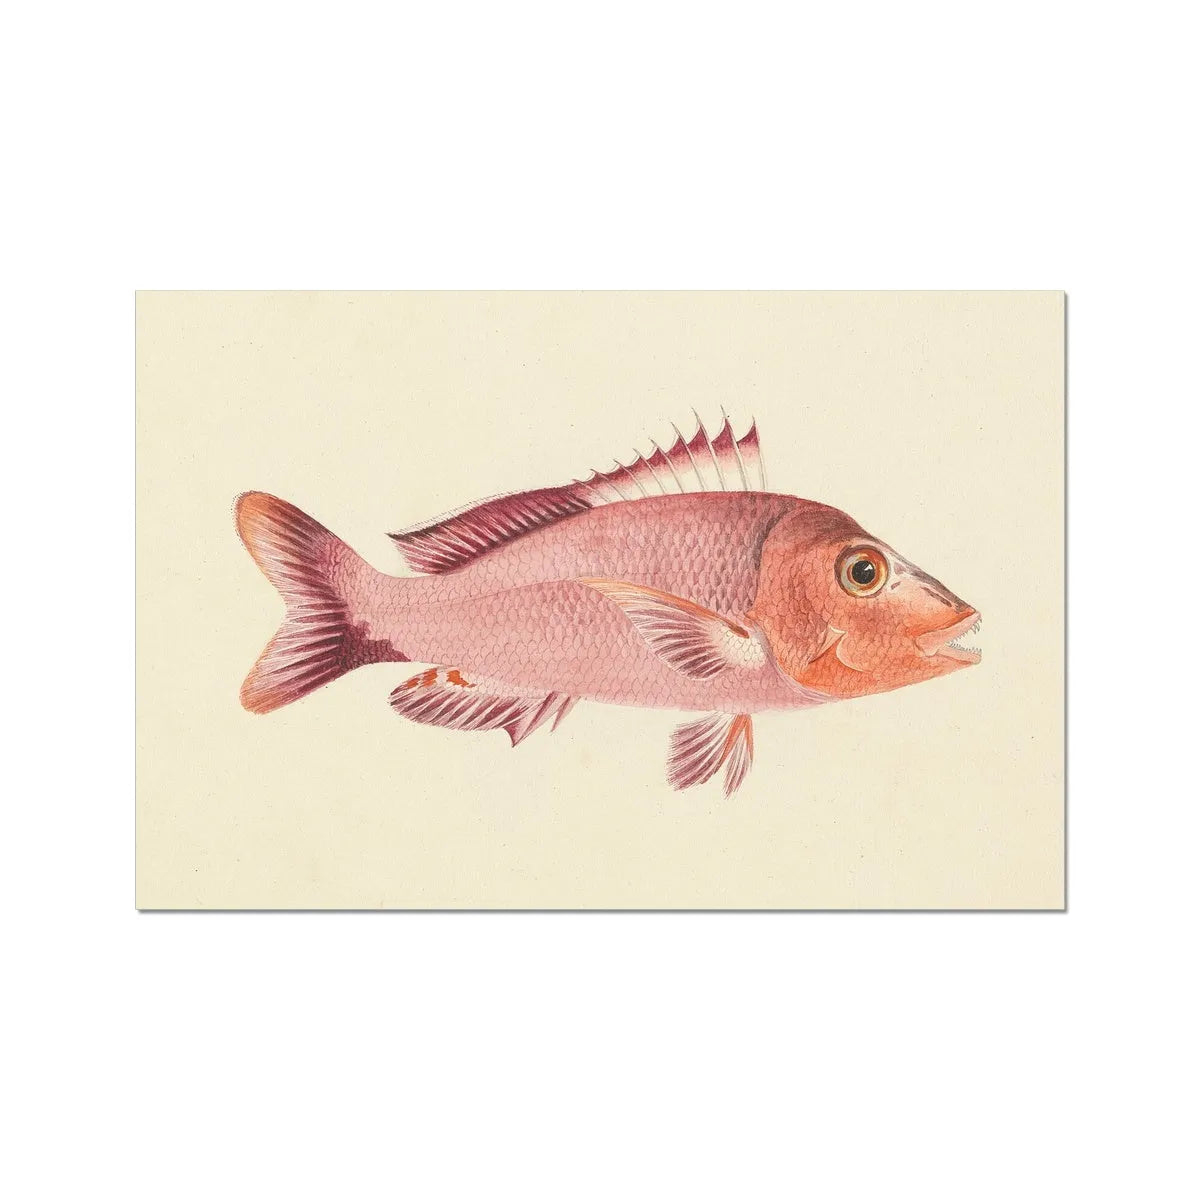 That Fish By Luigi Balugani Fine Art Print - 24’x16’ - Posters Prints & Visual Artwork - Aesthetic Art